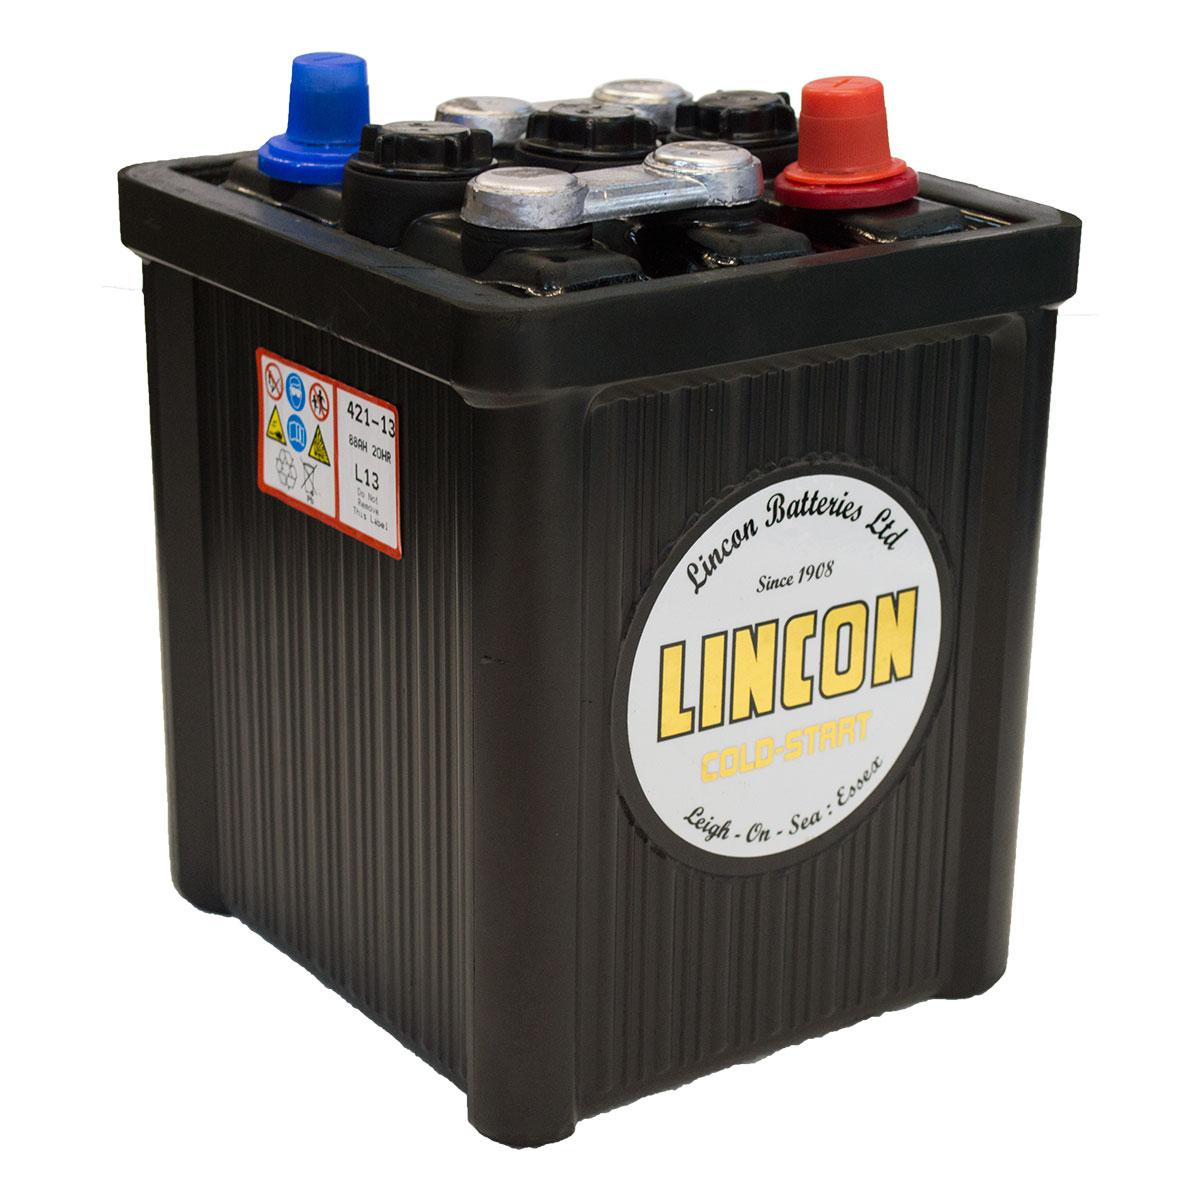 Lincon-421-6v-Classic-Car-Battery.jpg